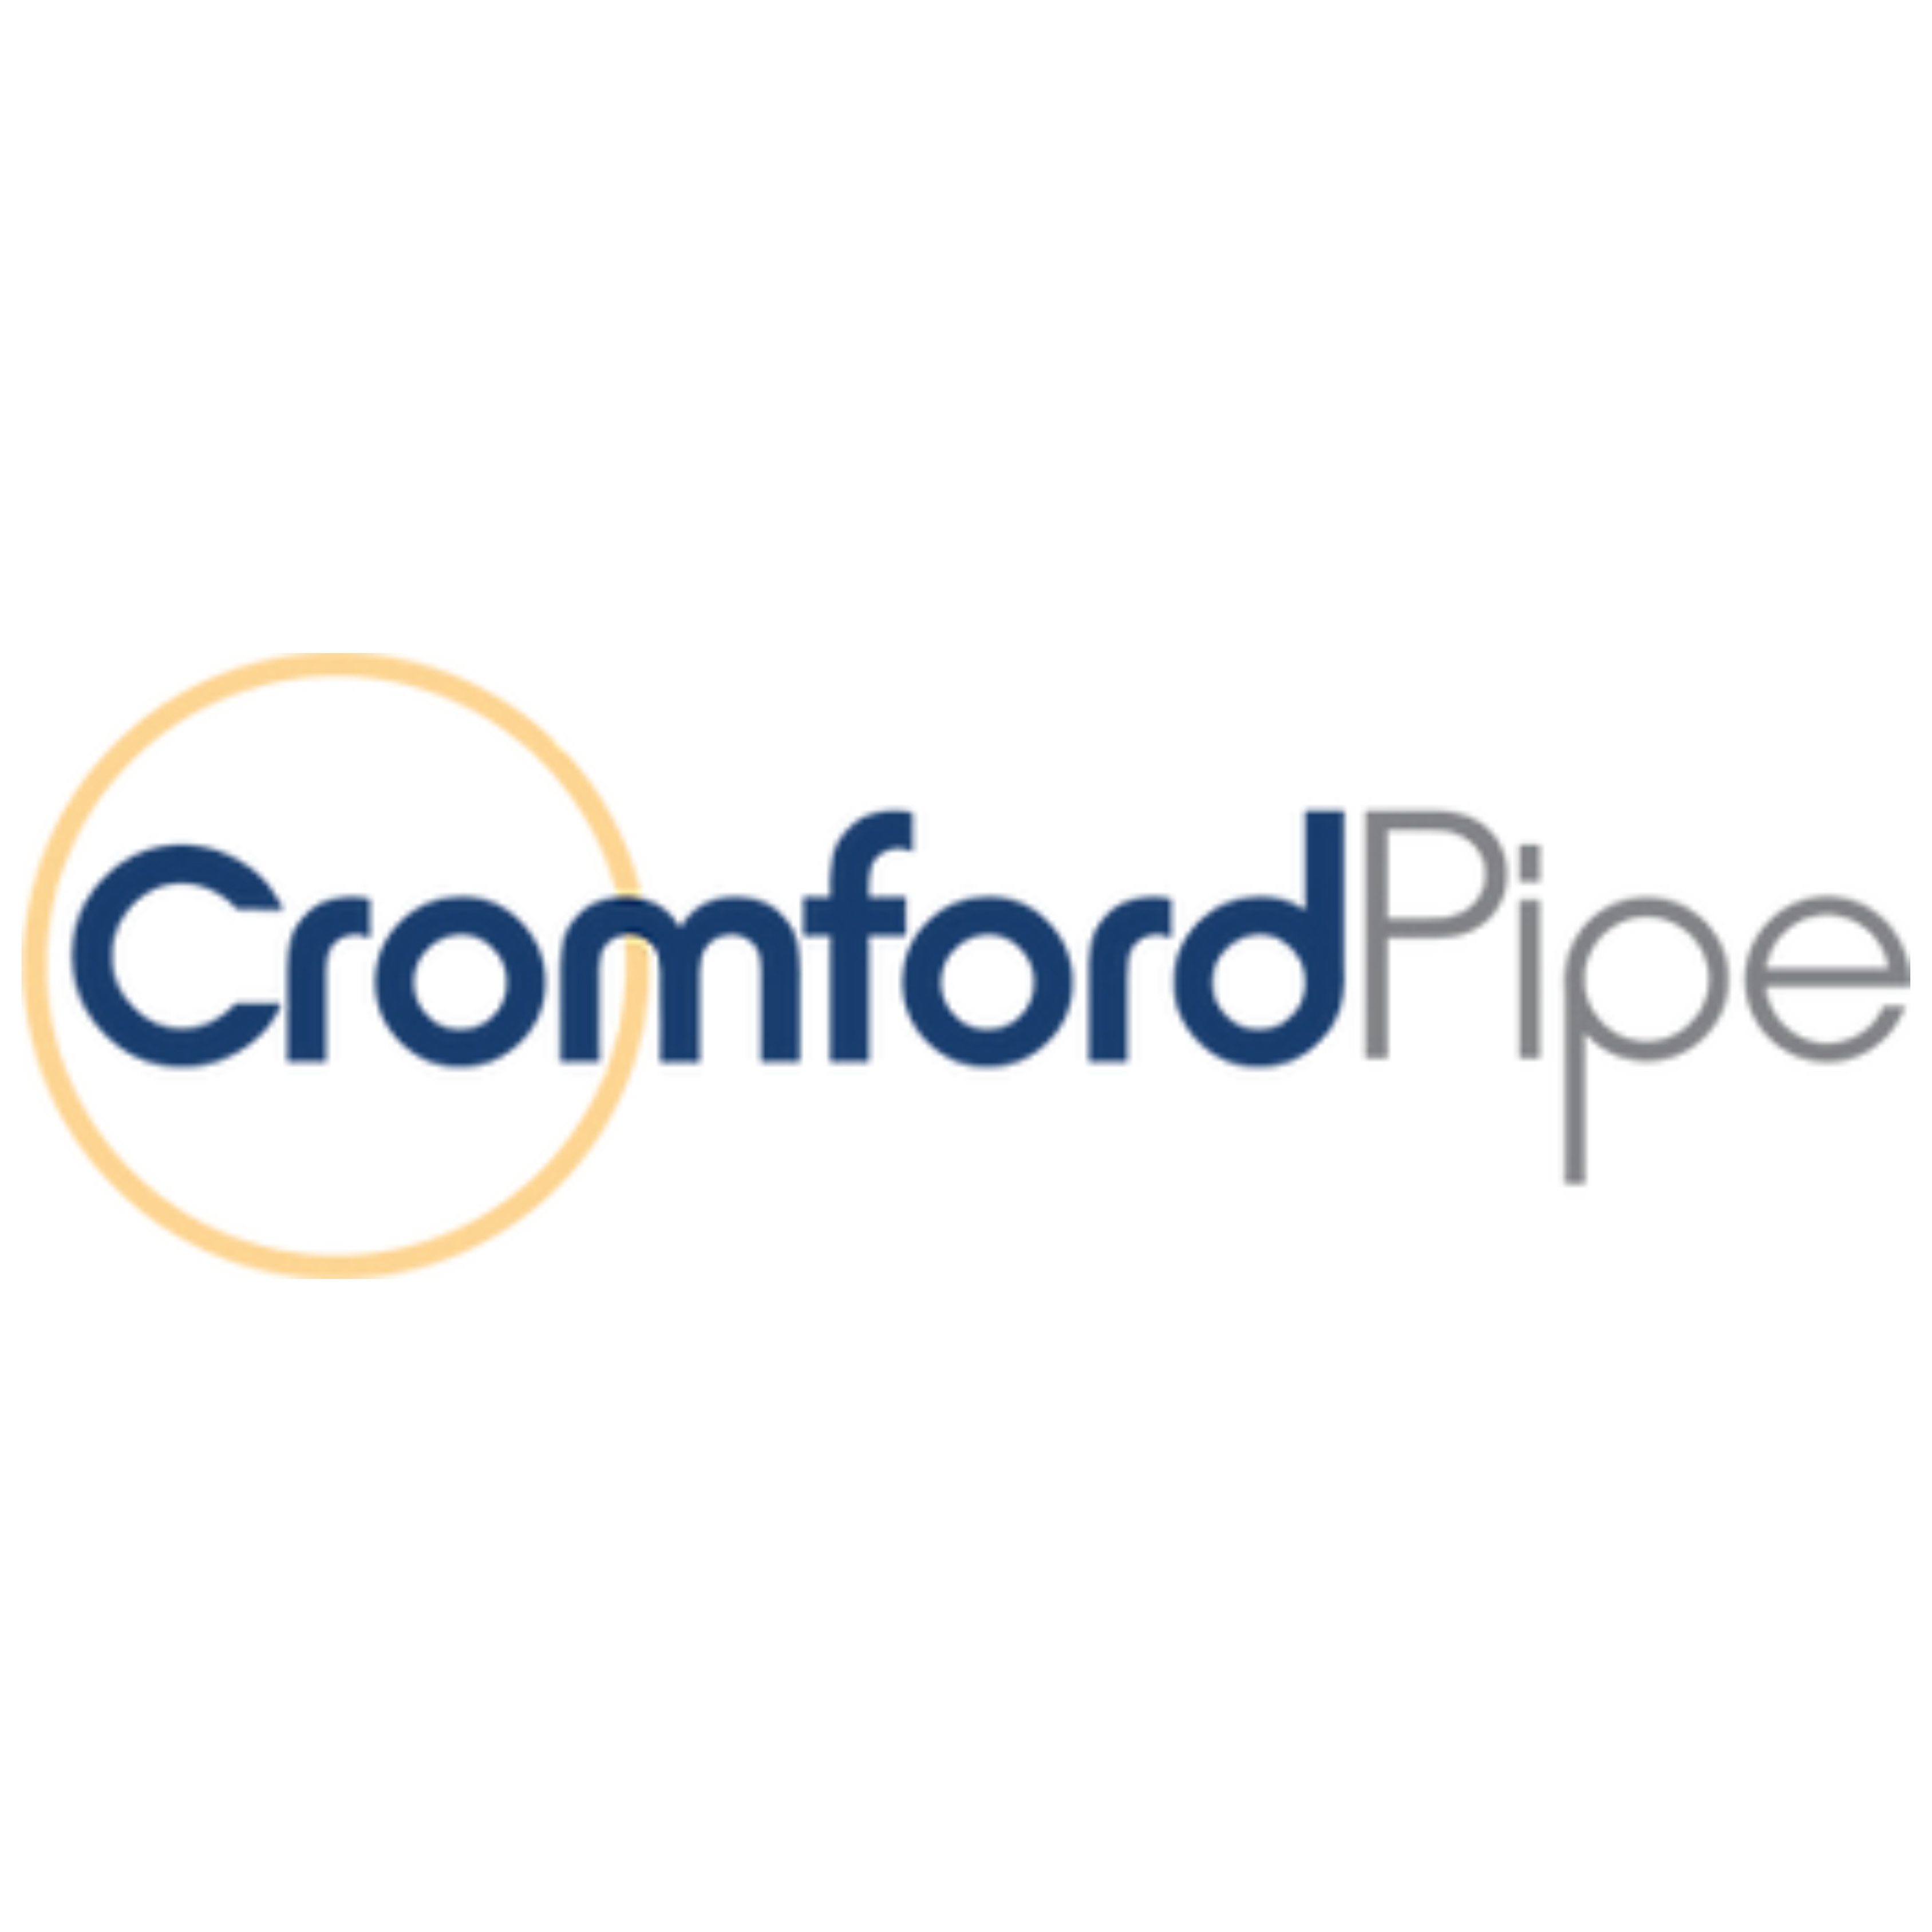 Cromford Pipe Ltd